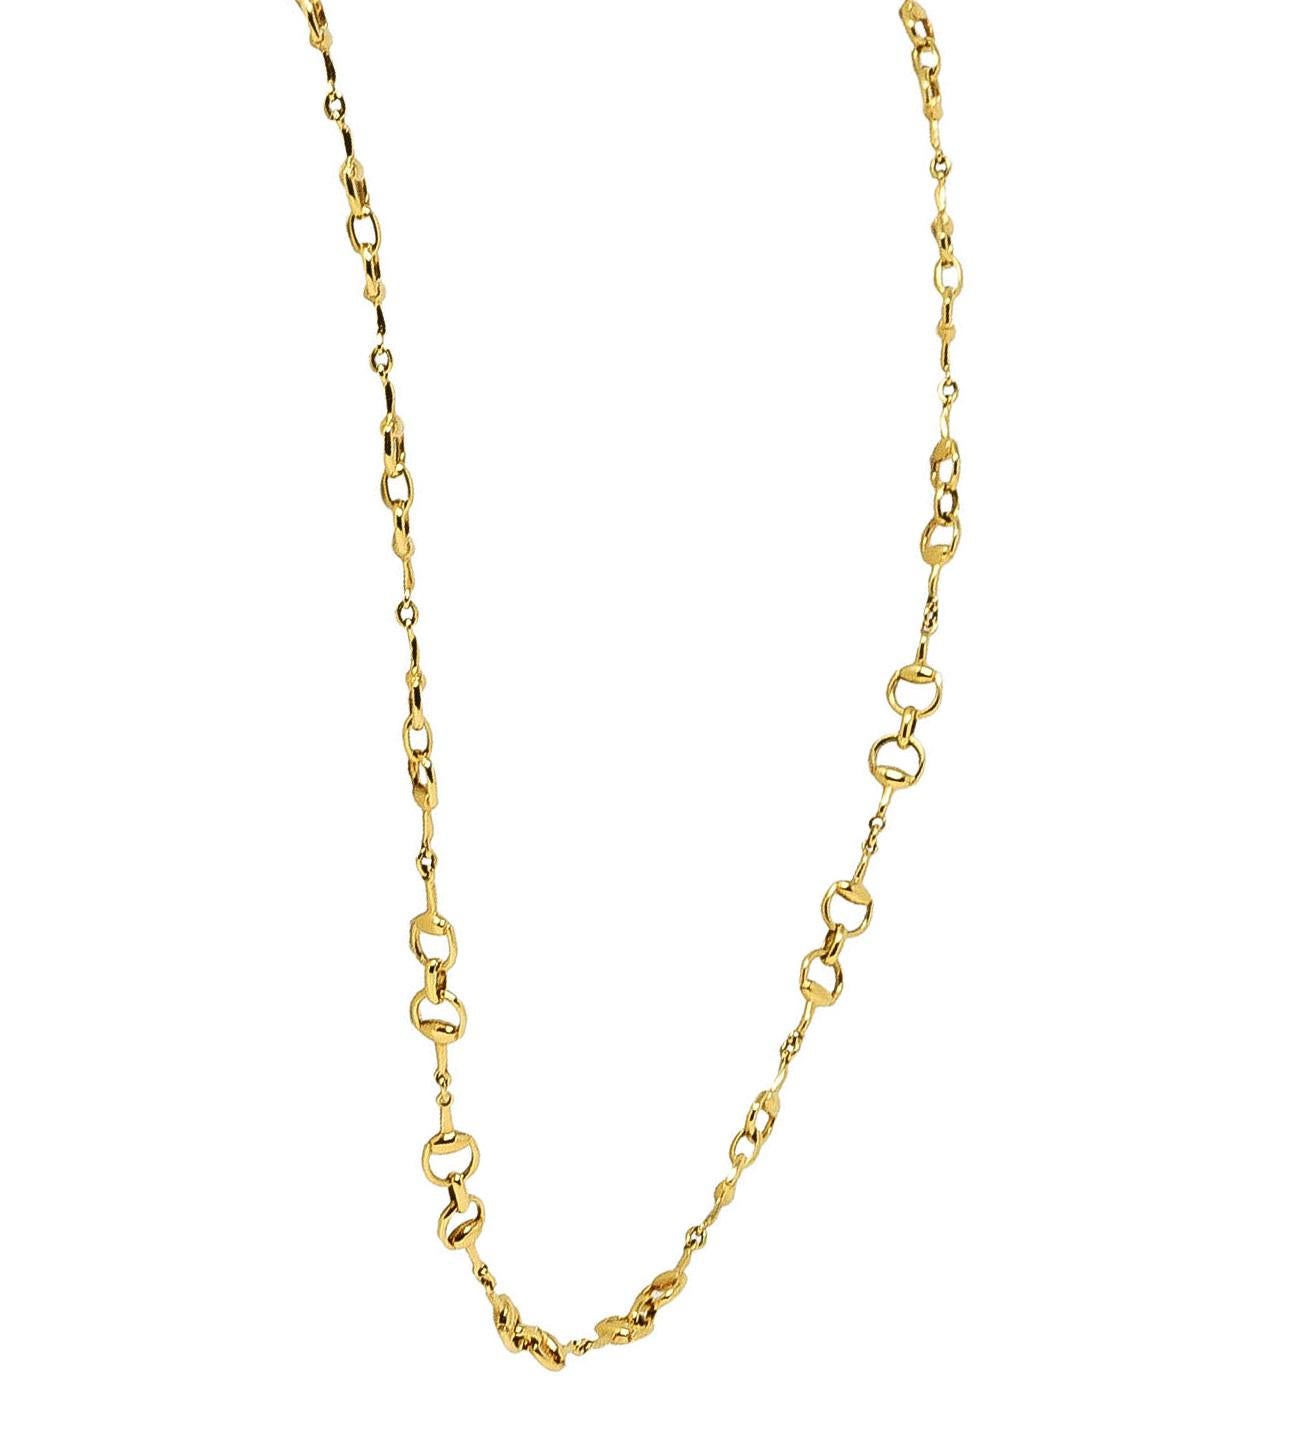 Contemporary Gucci 18 Karat Yellow Gold Horsebit Horse Chain Link Necklace